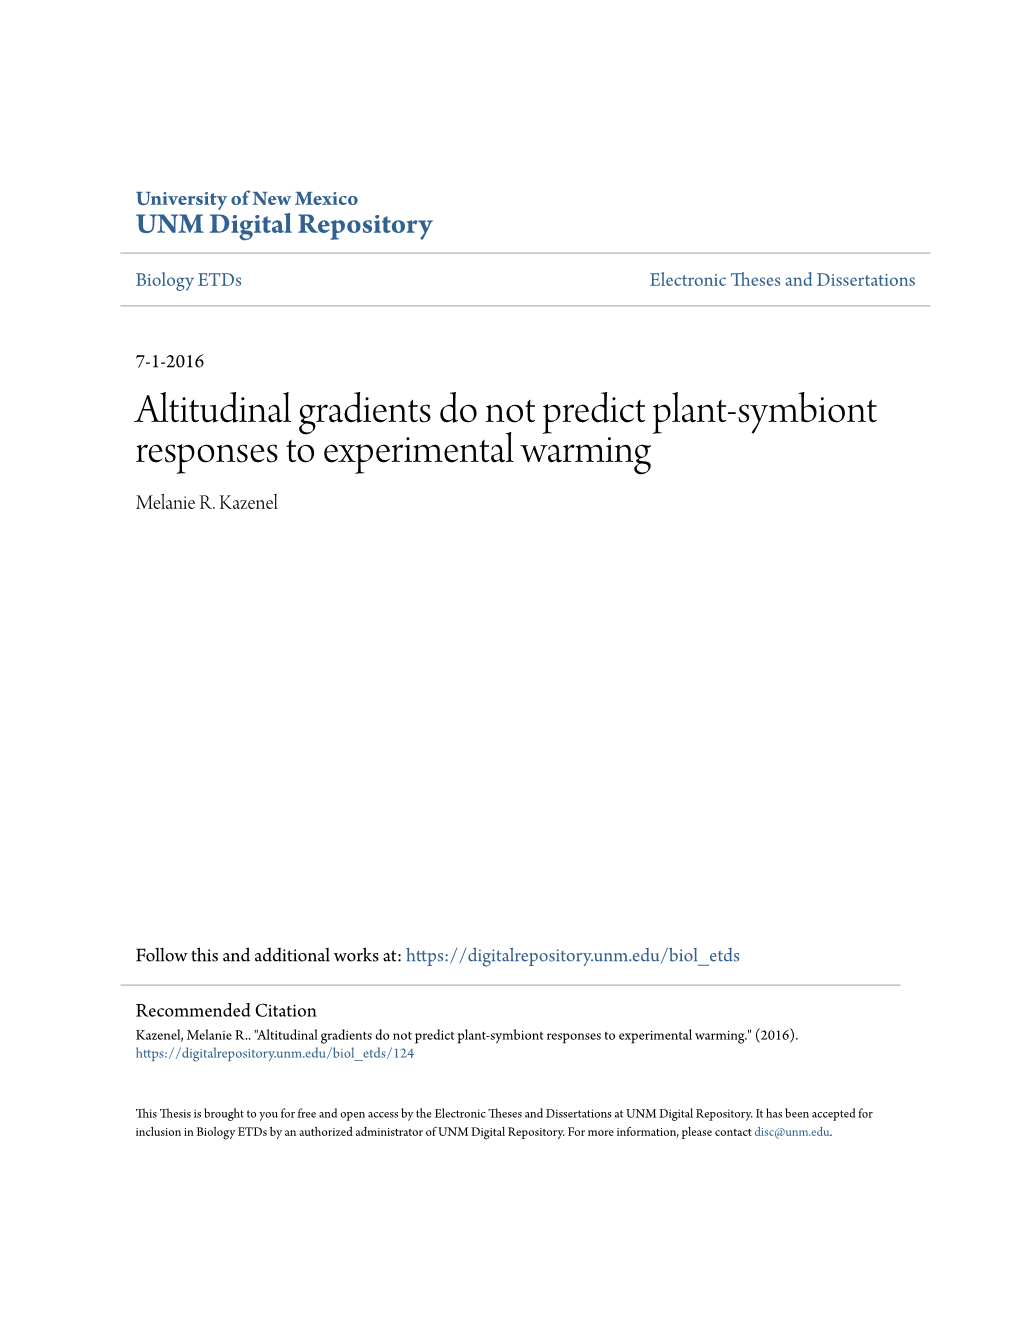 Altitudinal Gradients Do Not Predict Plant-Symbiont Responses to Experimental Warming Melanie R